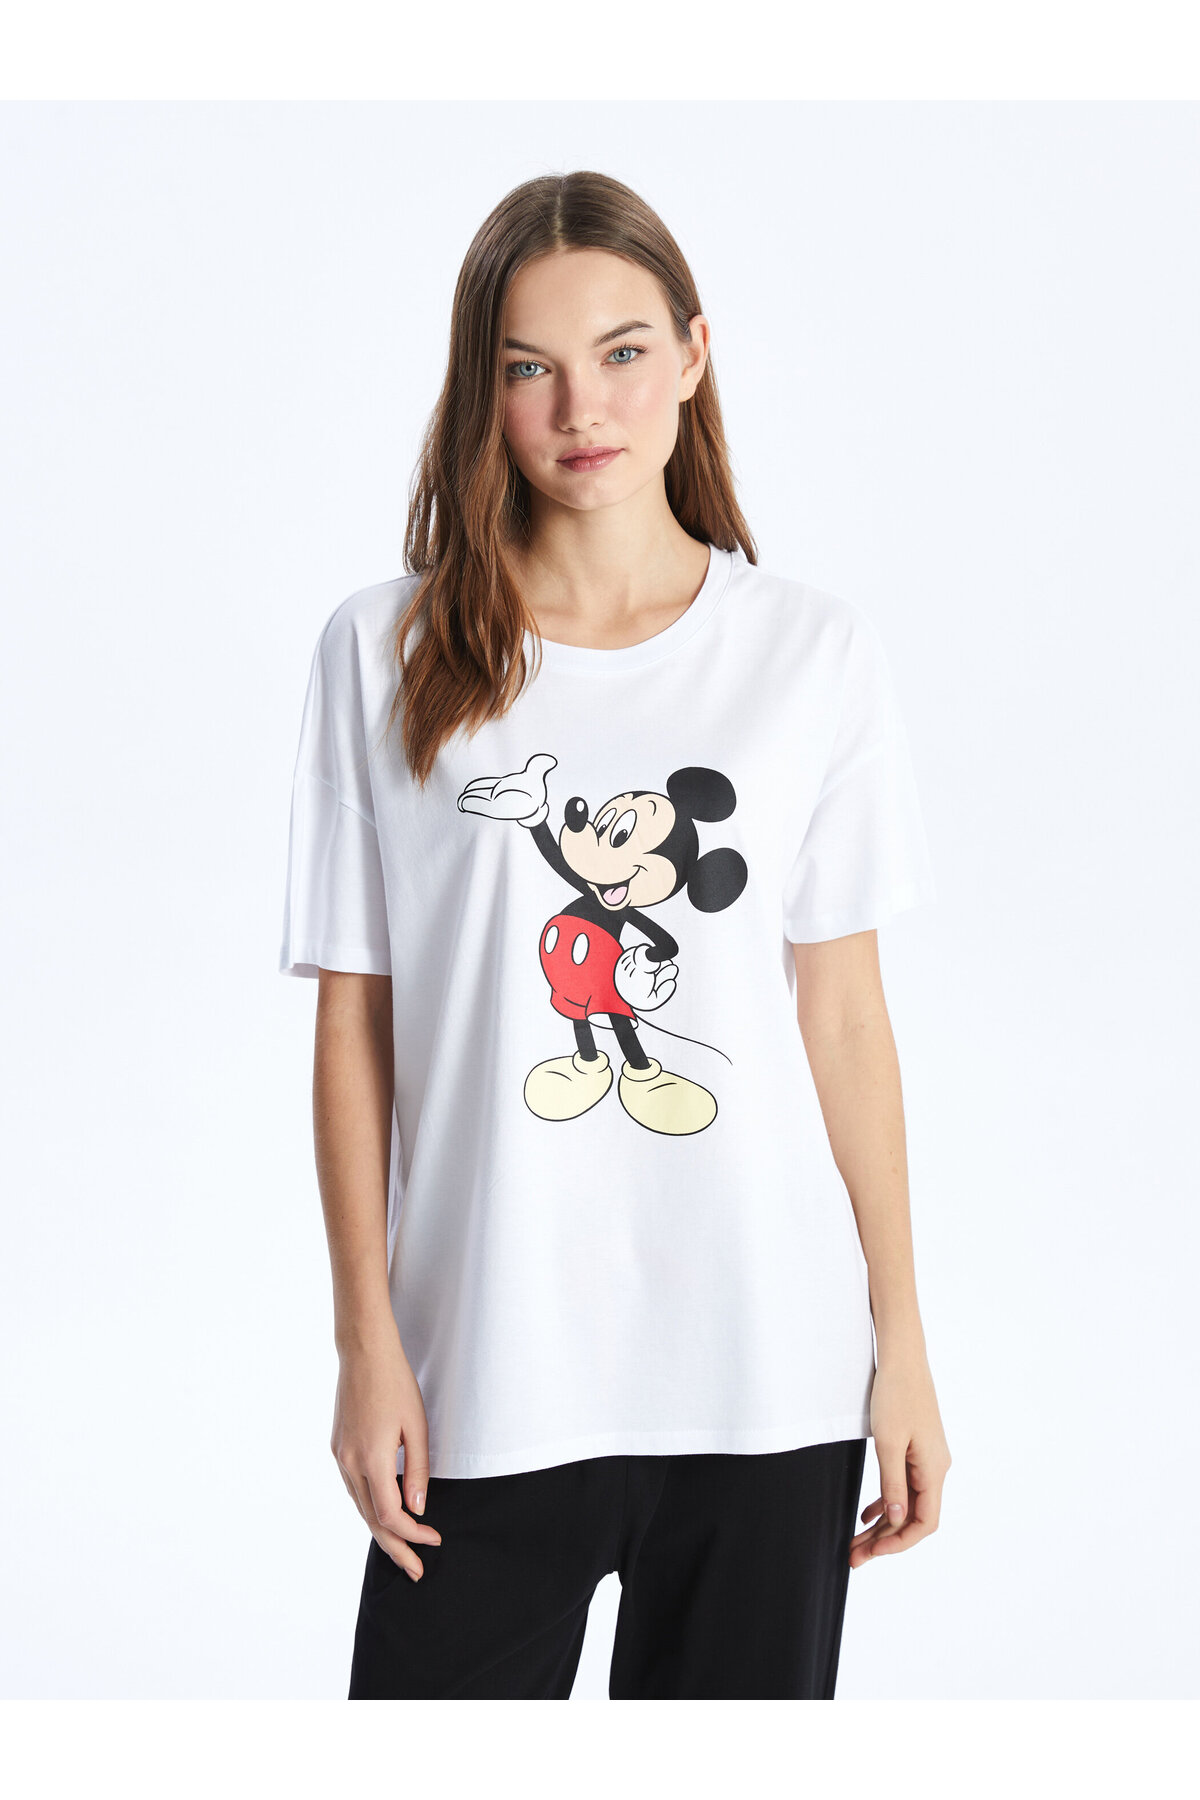 LC Waikiki Crew Neck Mickey Mouse Printed Short Sleeve Women's Pajamas Set